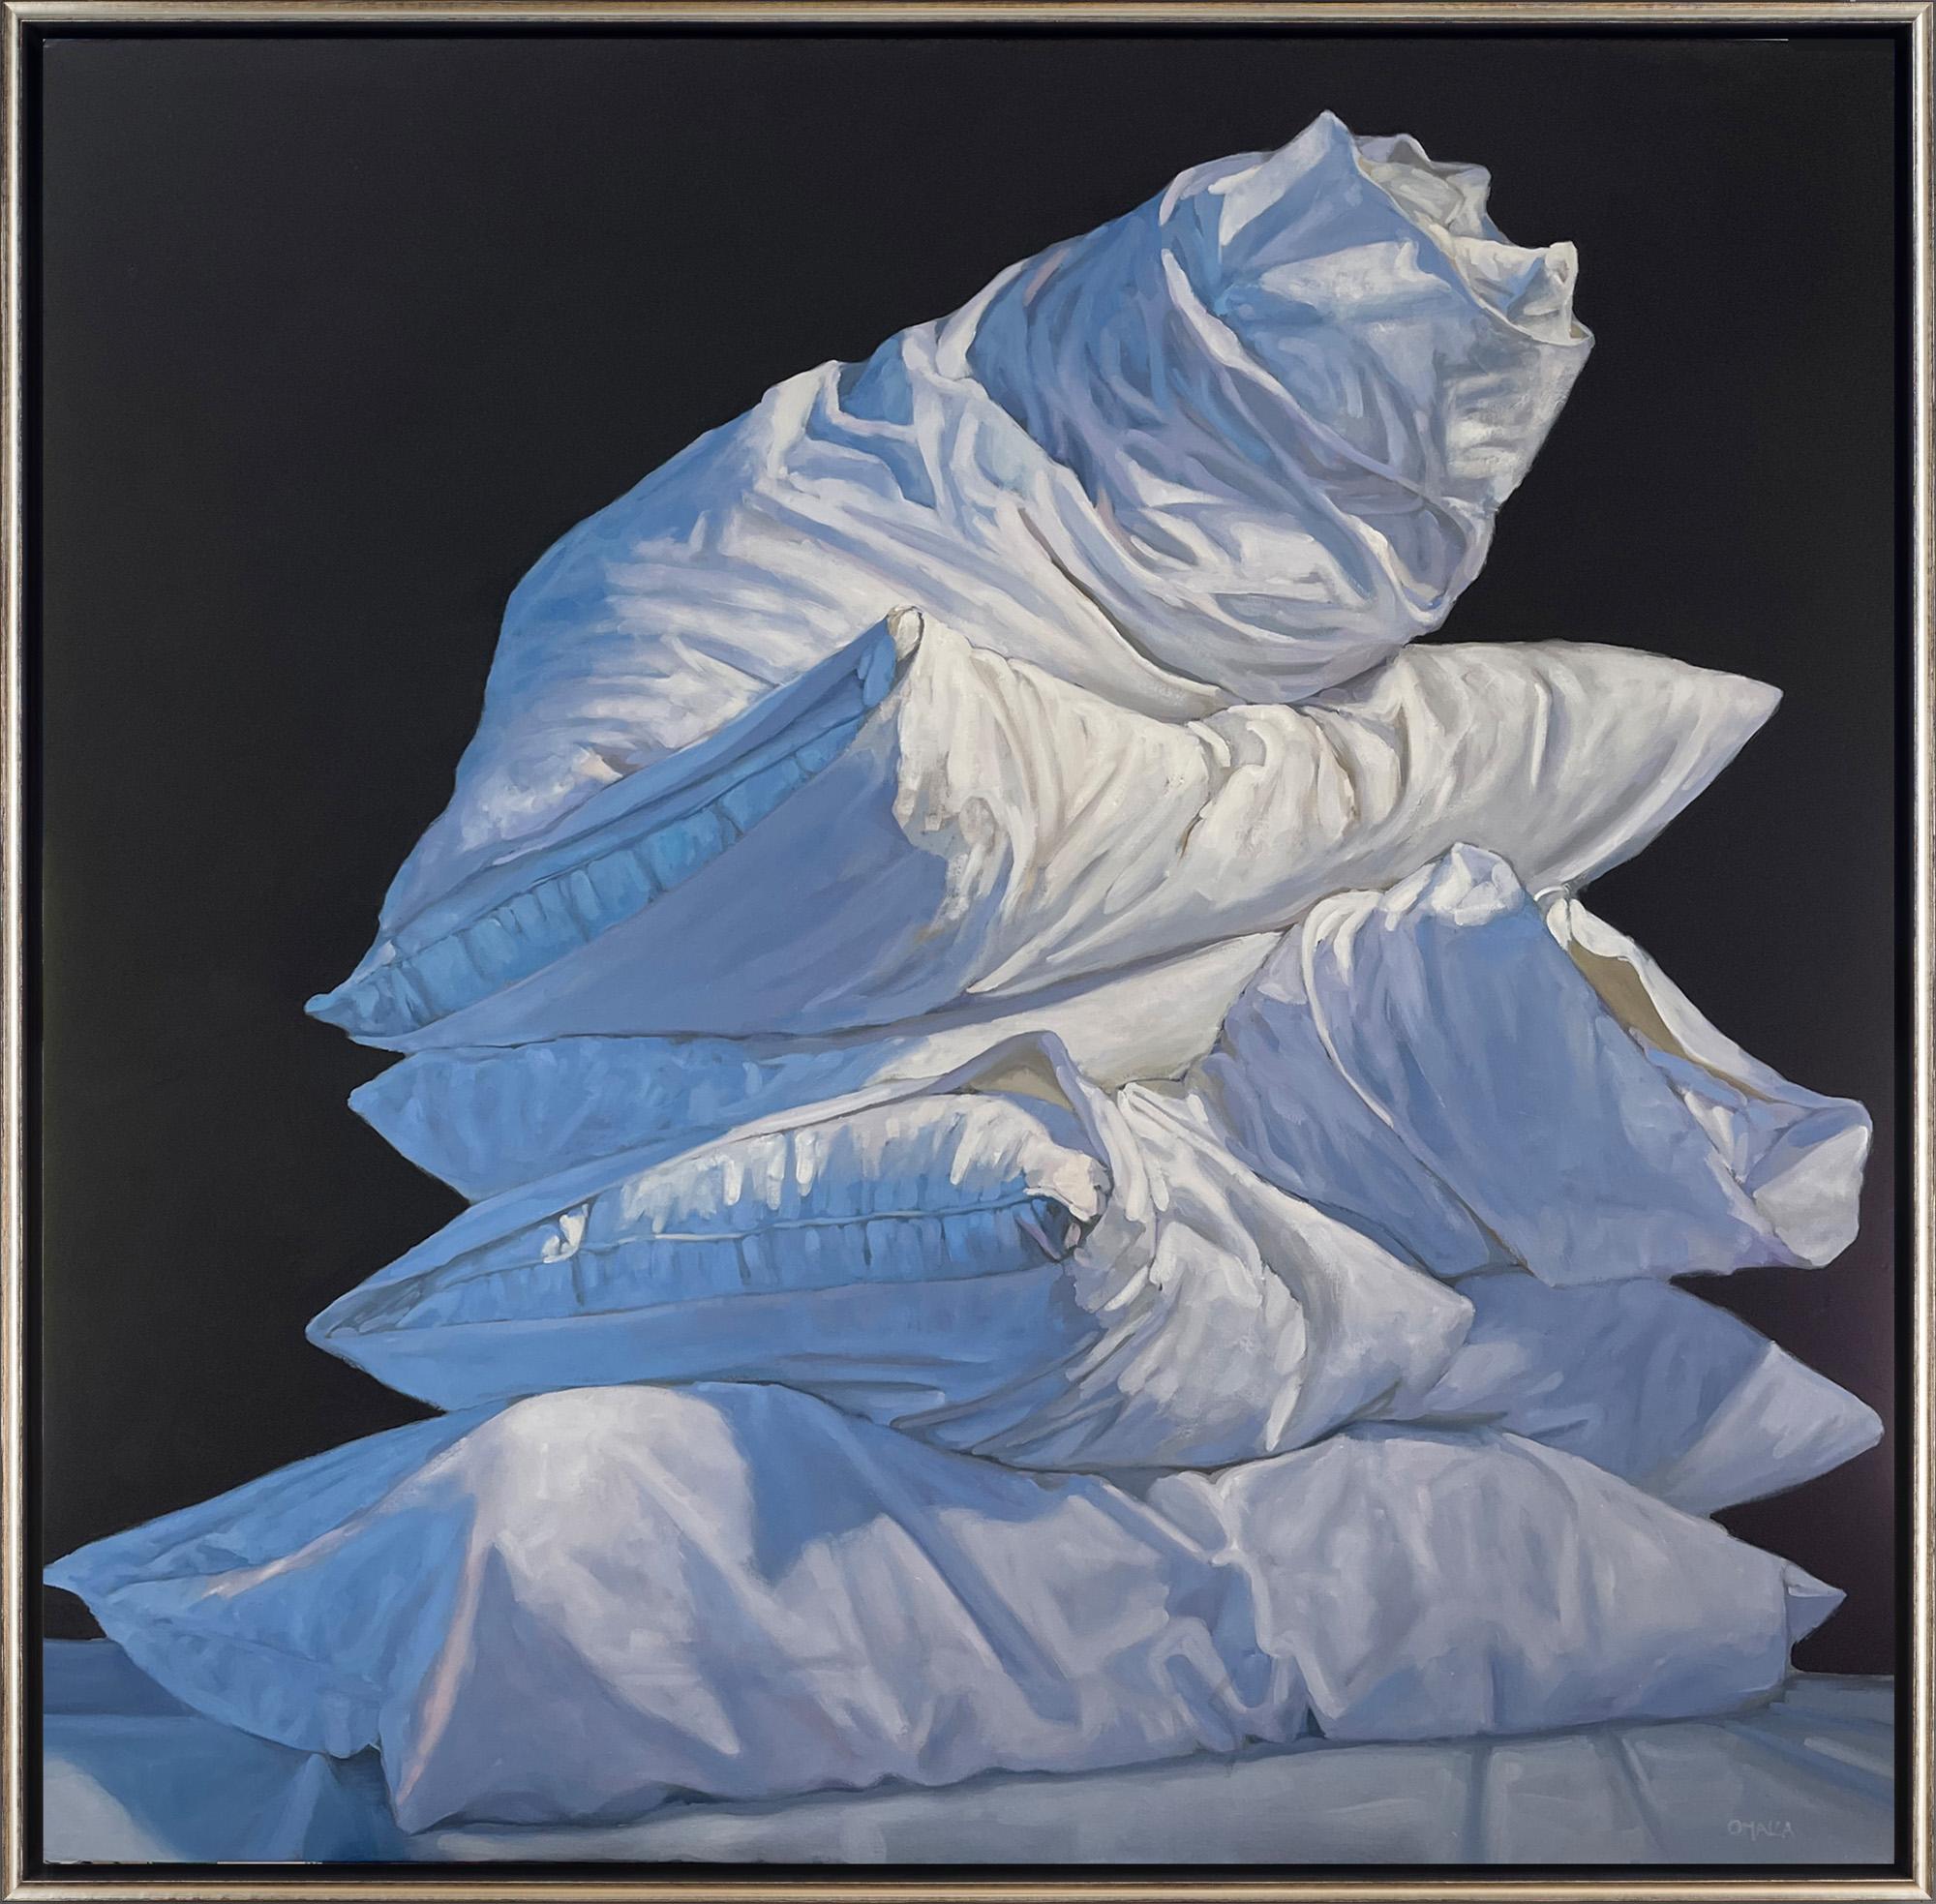 Carol O'Malia Still-Life Painting - "Achievement" Contemporary Still Life of Pillows, Framed Oil on Canvas Painting